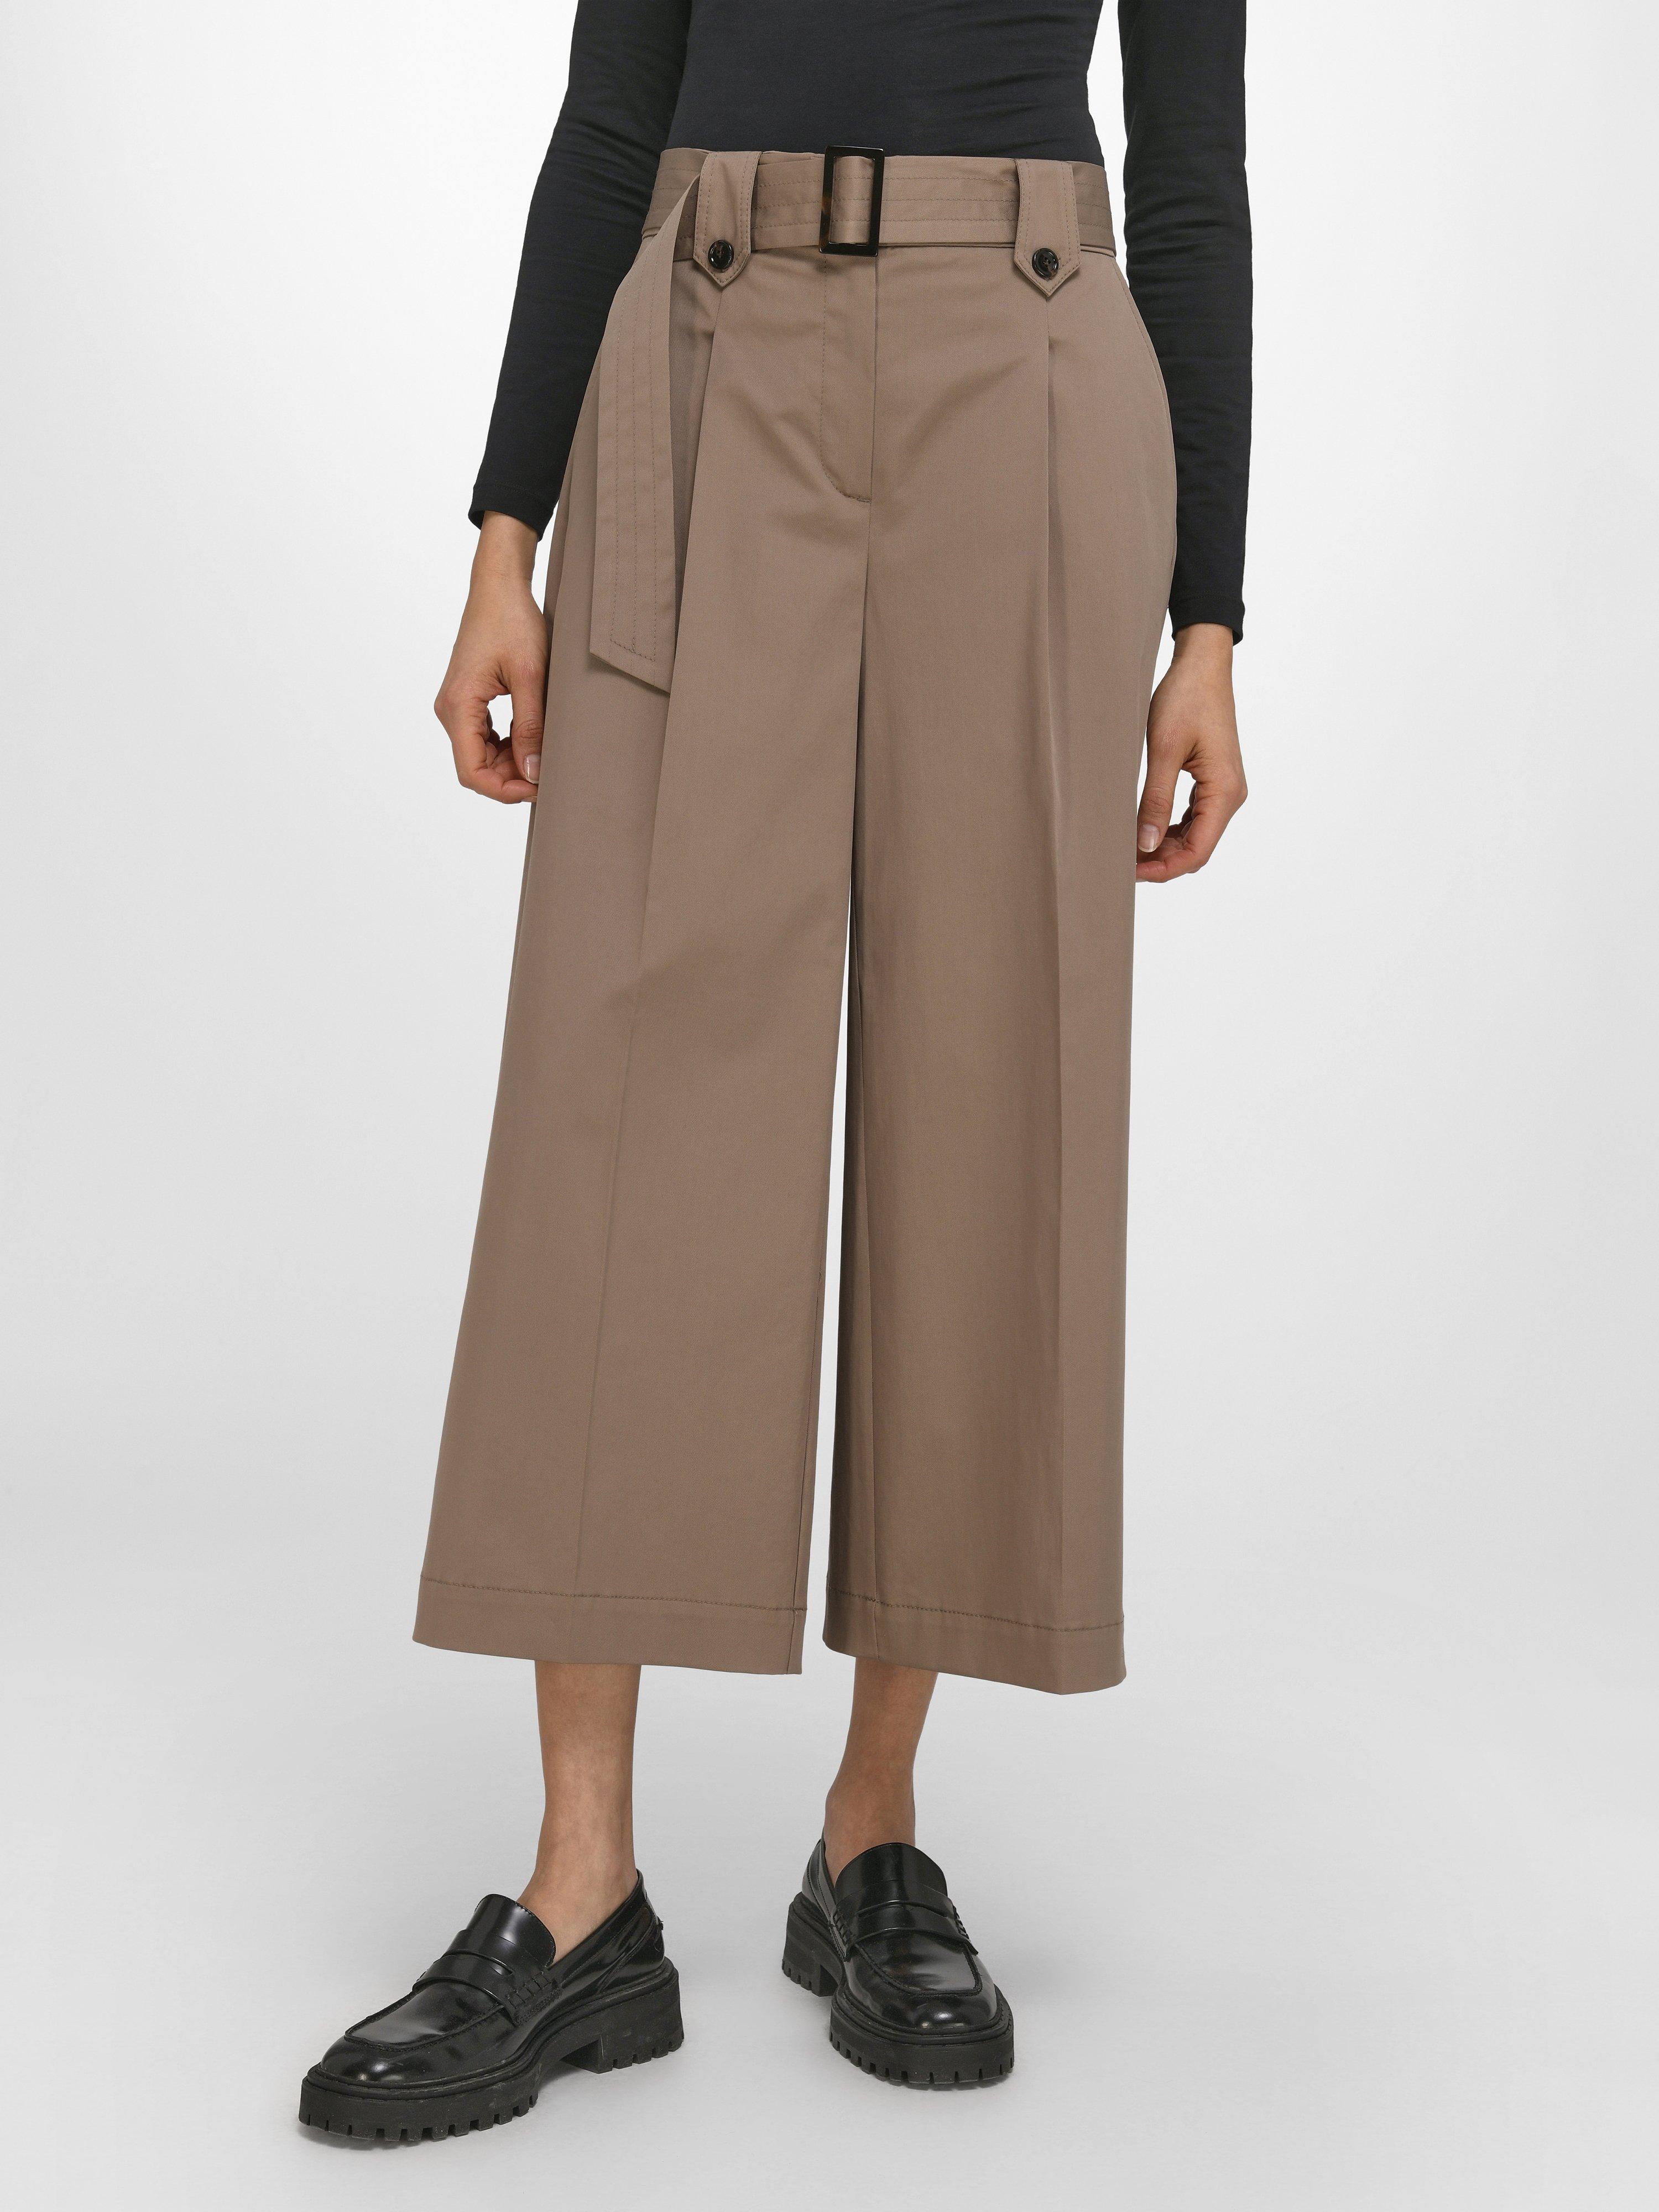 BASLER - La jupe-culotte large ceinture